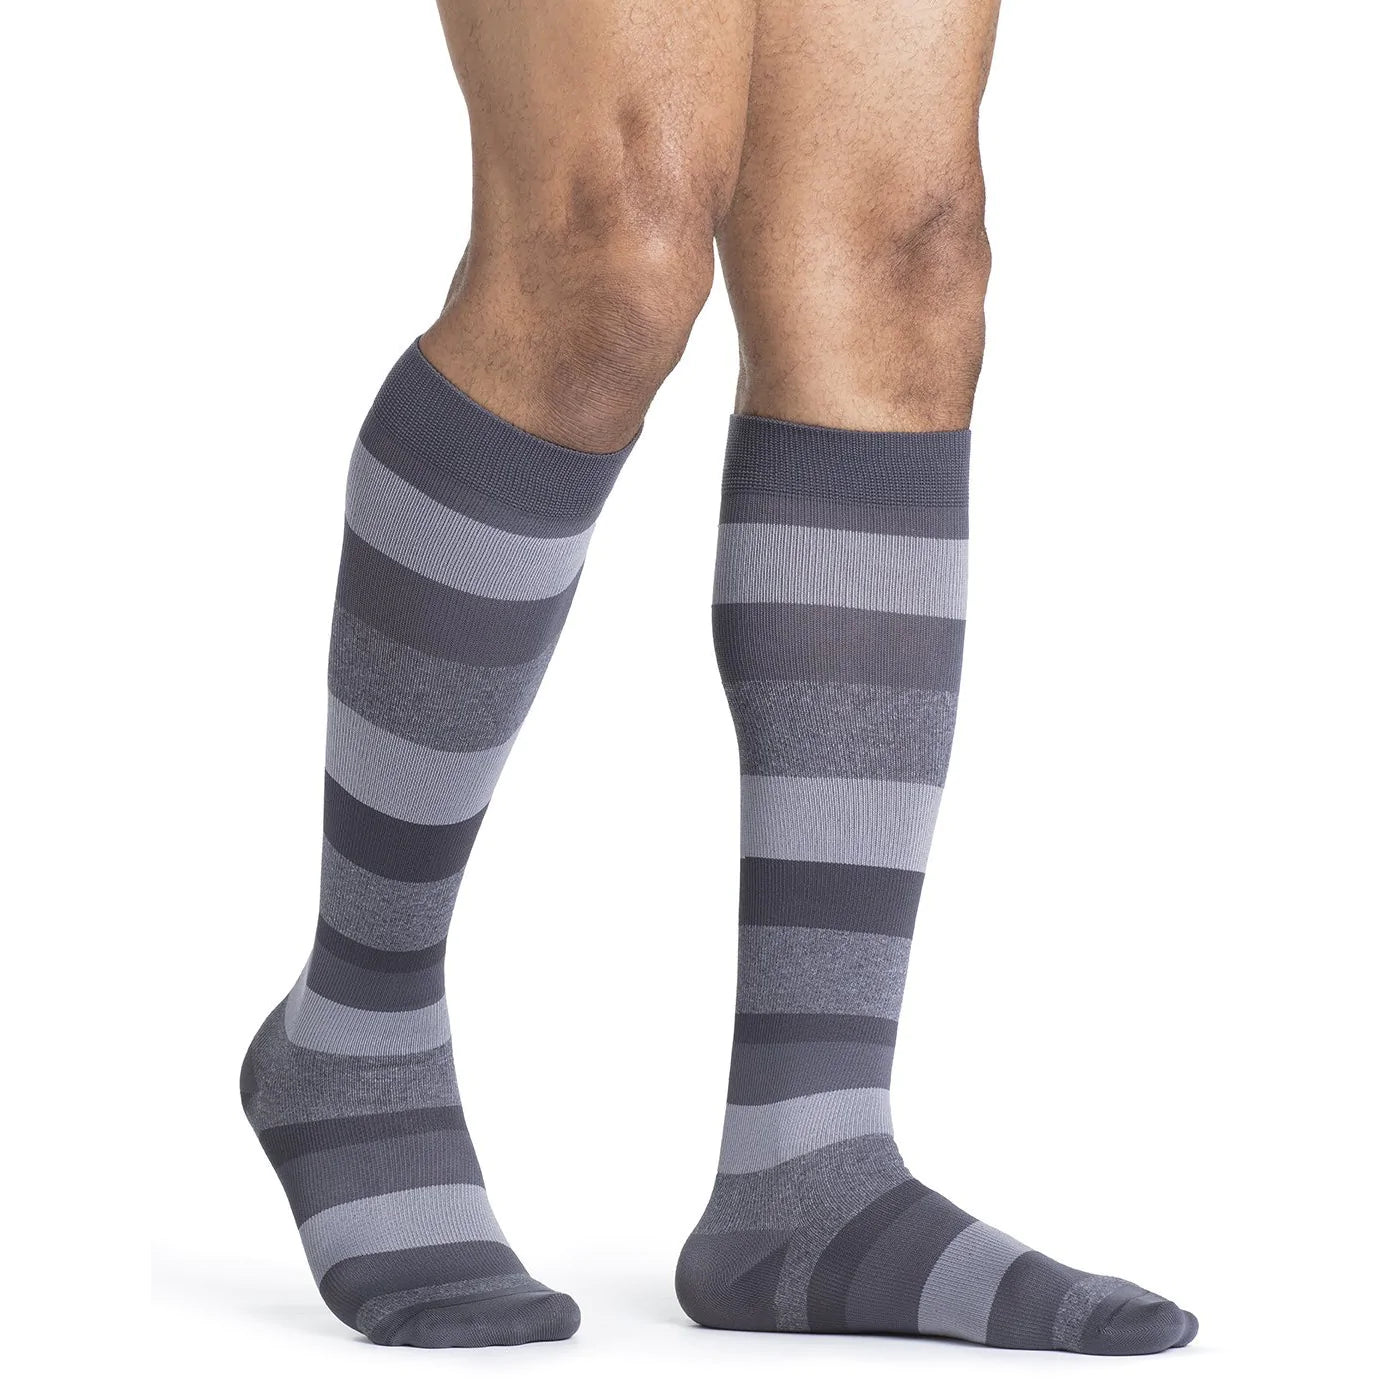 Sigvaris Men Cushioned Cotton Knee High Compression Socks, White, Medium  Long